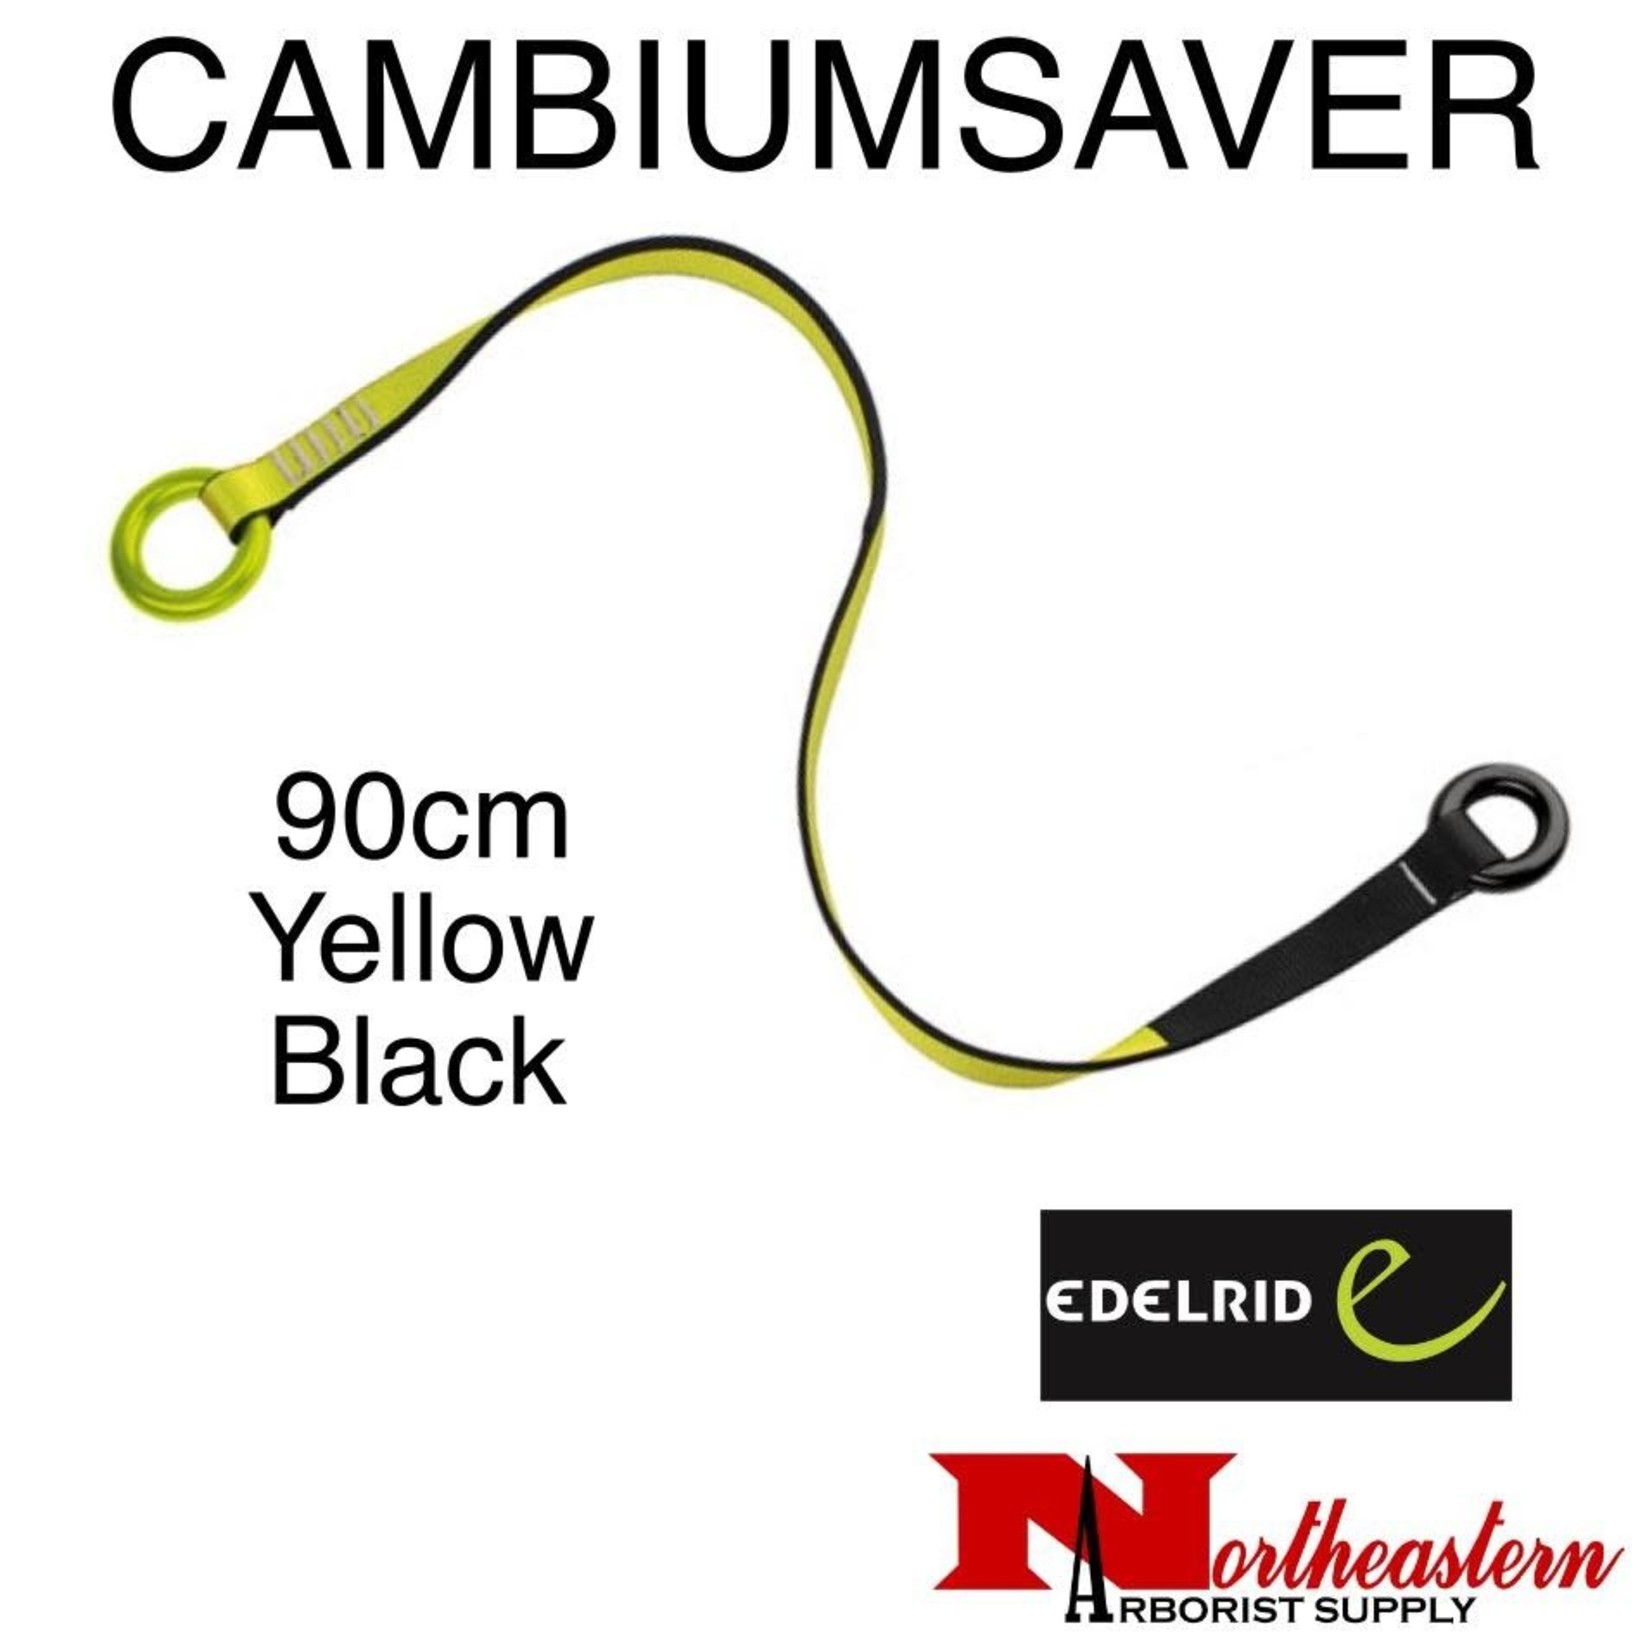 EDELRID Cambiumsaver 90cm, Yellow + Black, 25 kN